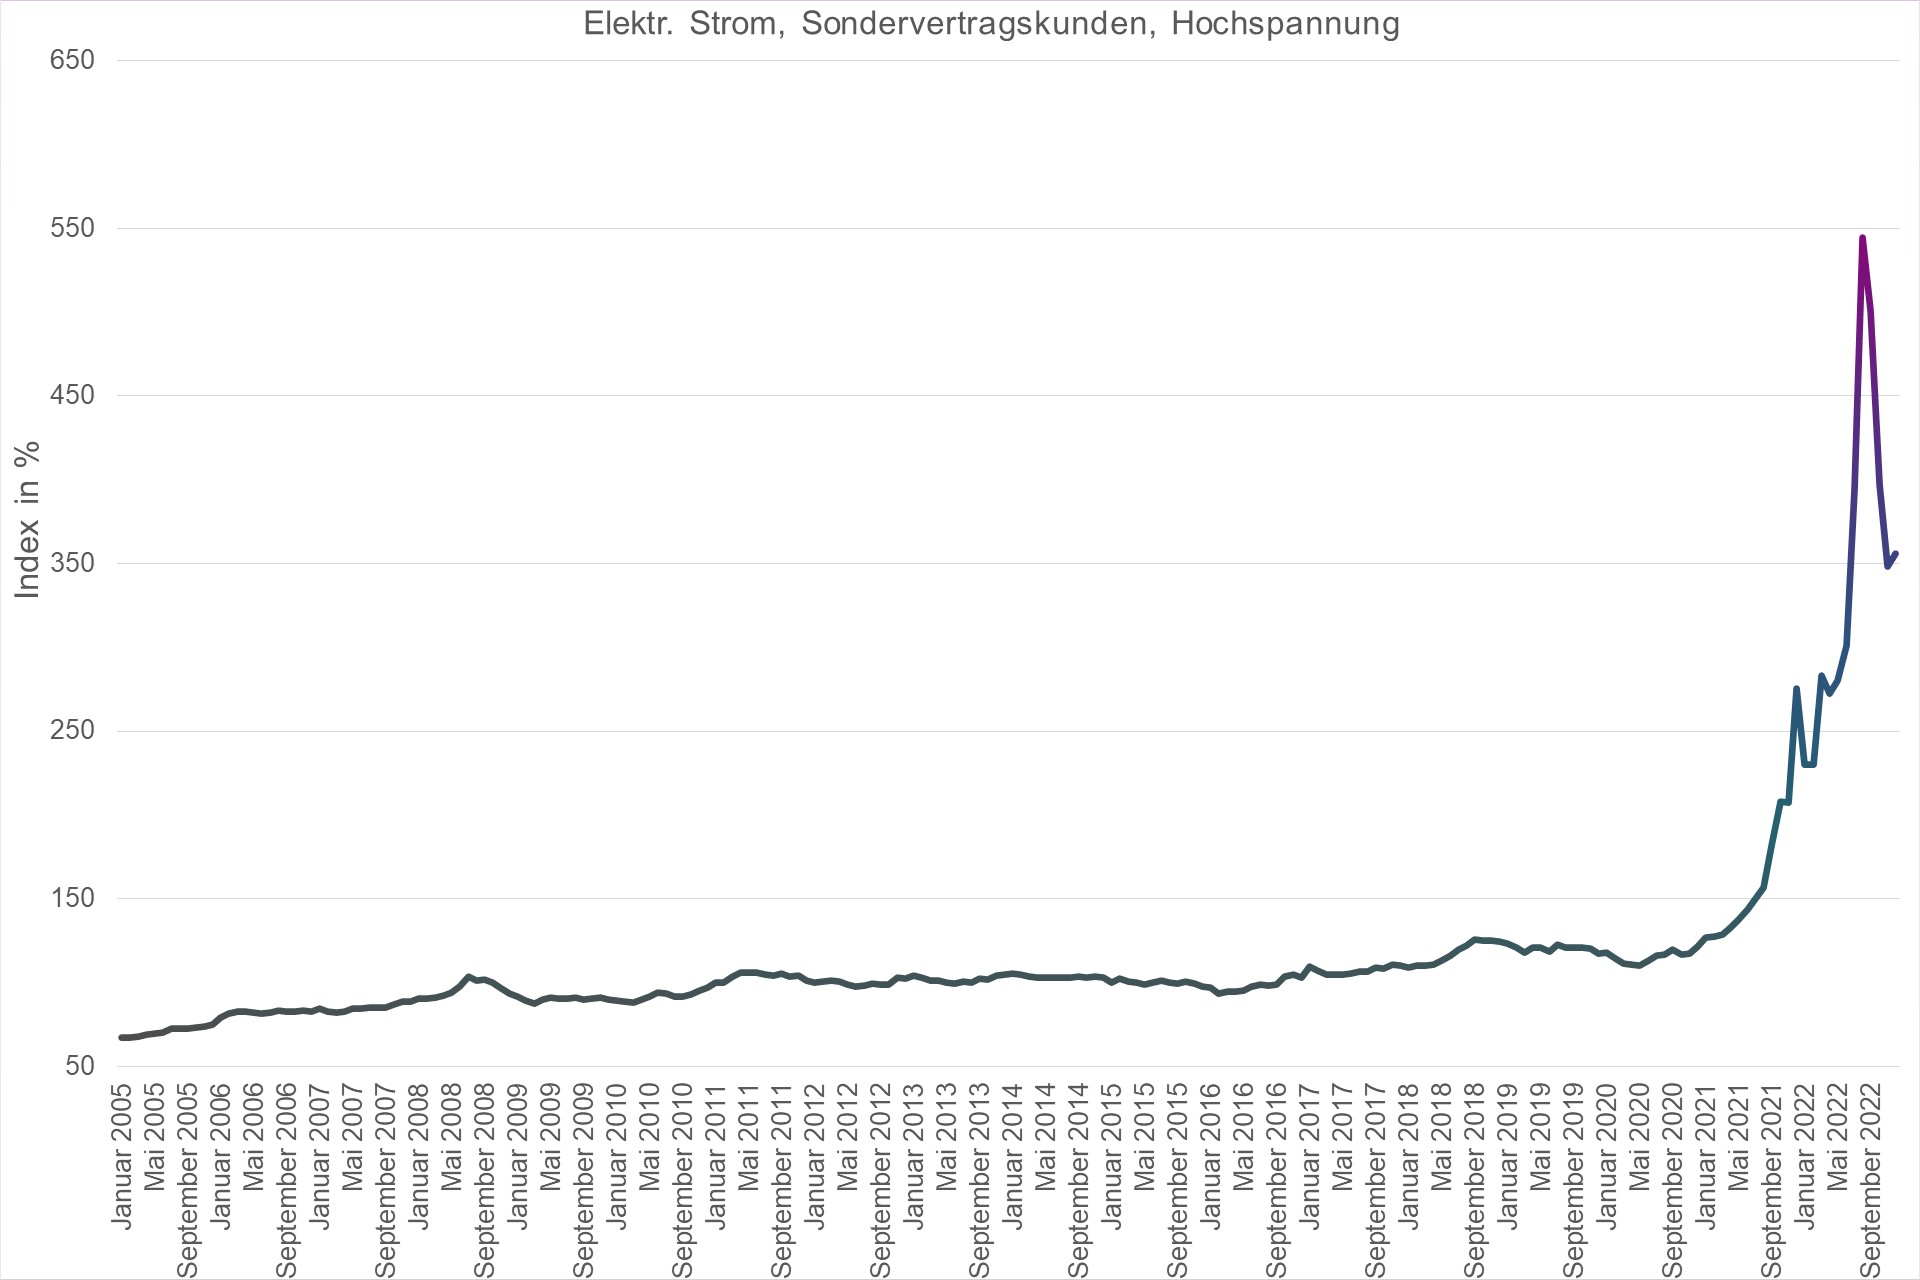 Grafik Preisindex Elektr. Strom, Sondervertragskunden, Hochspannung